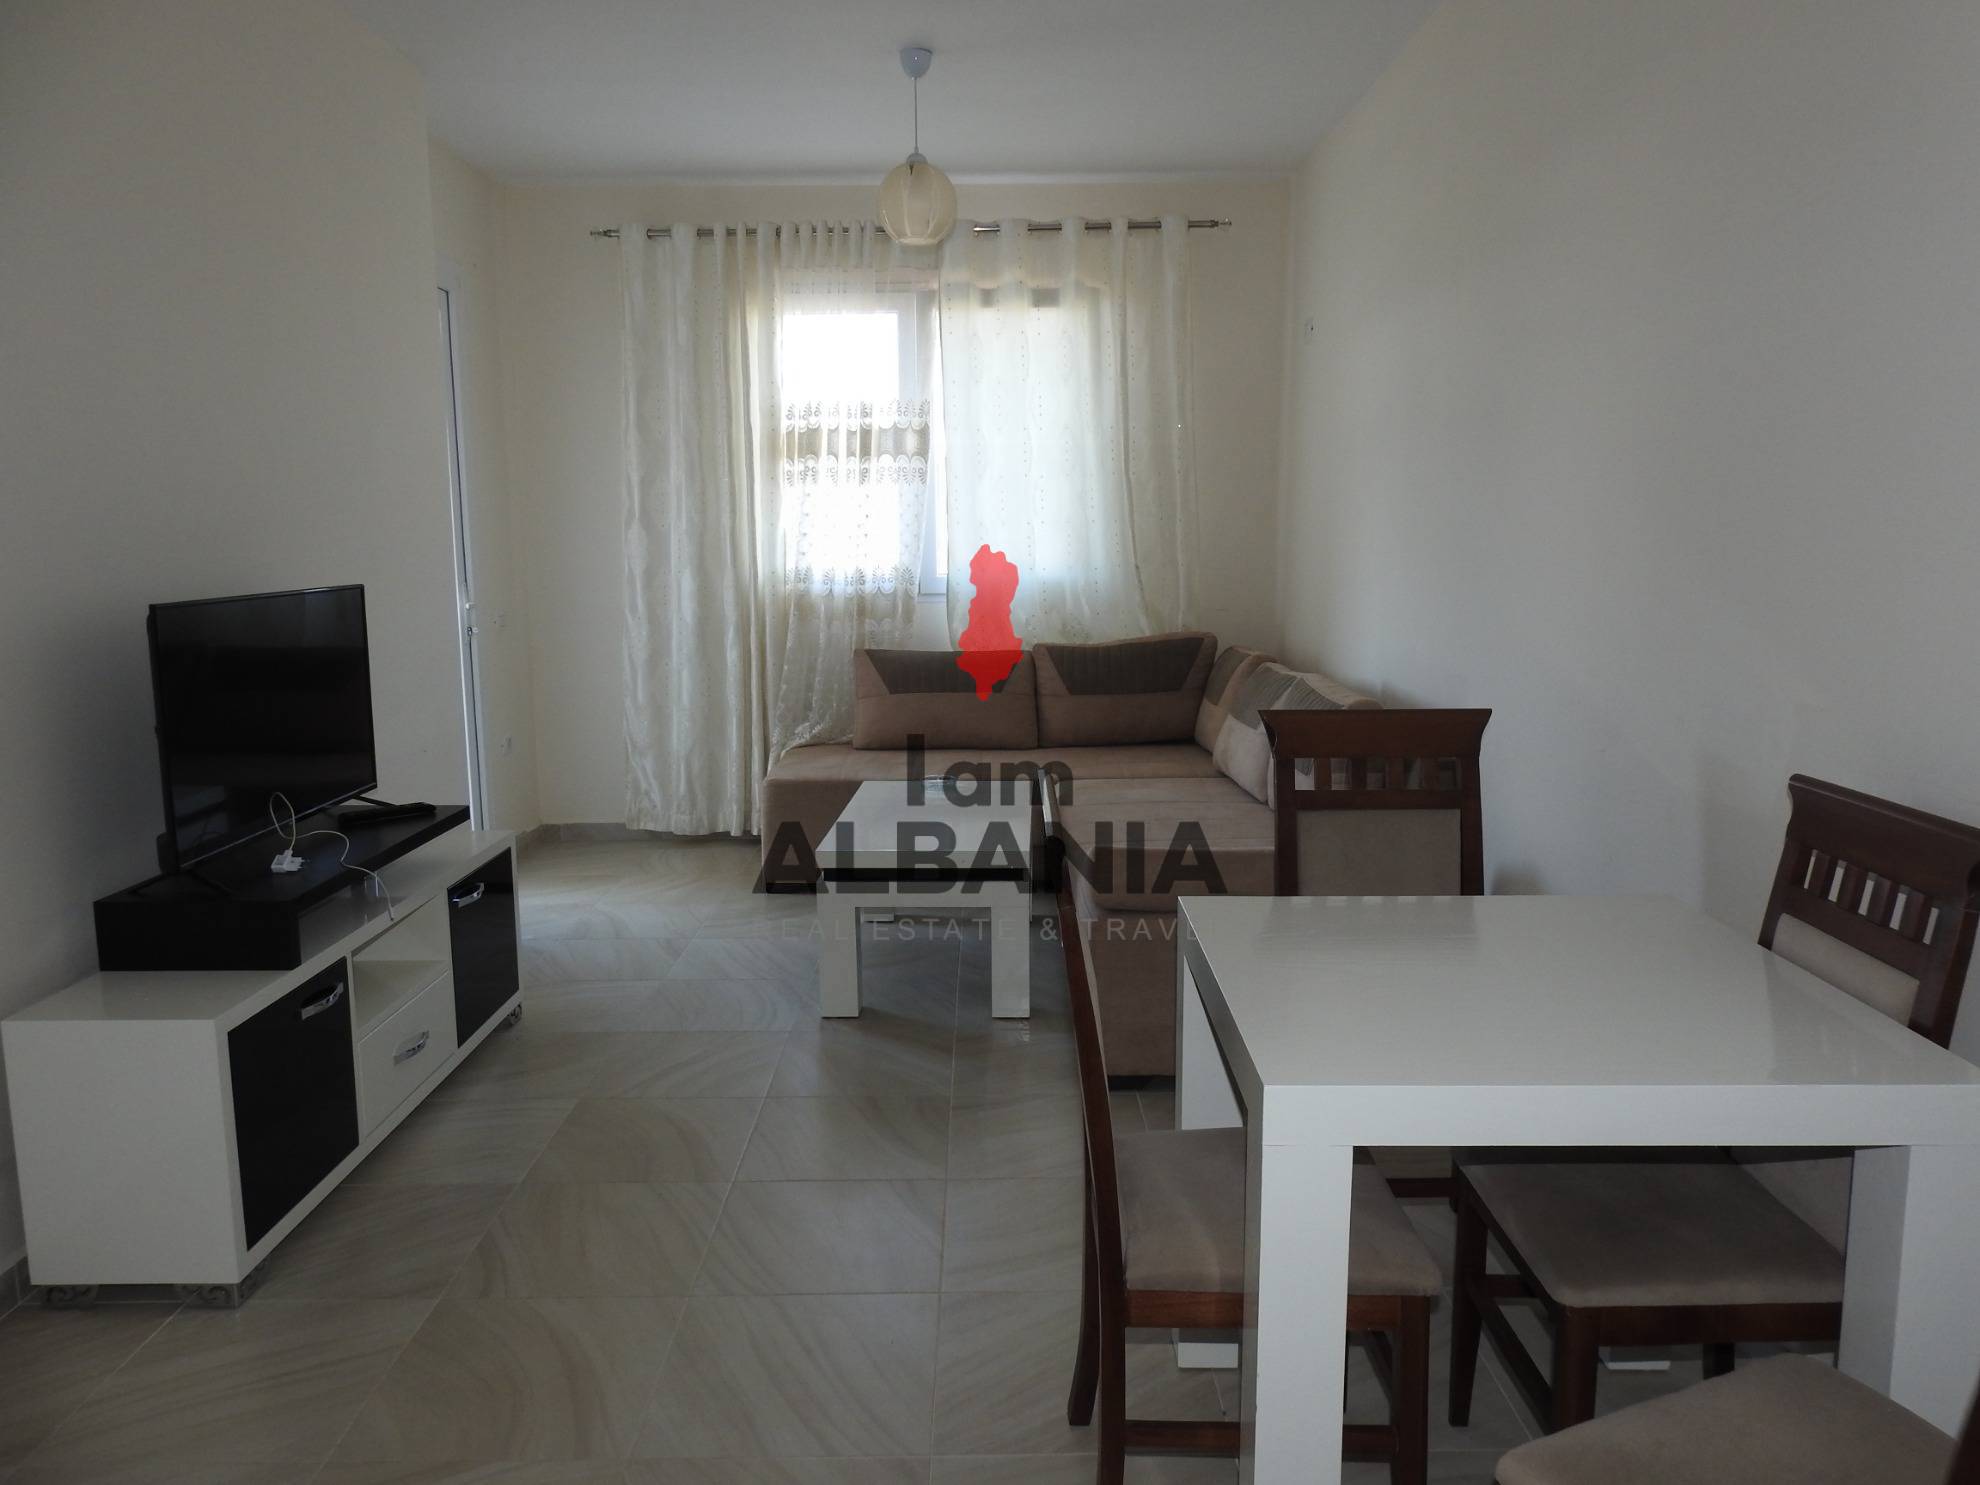 Albania, 2-room apartment in a tourist zone